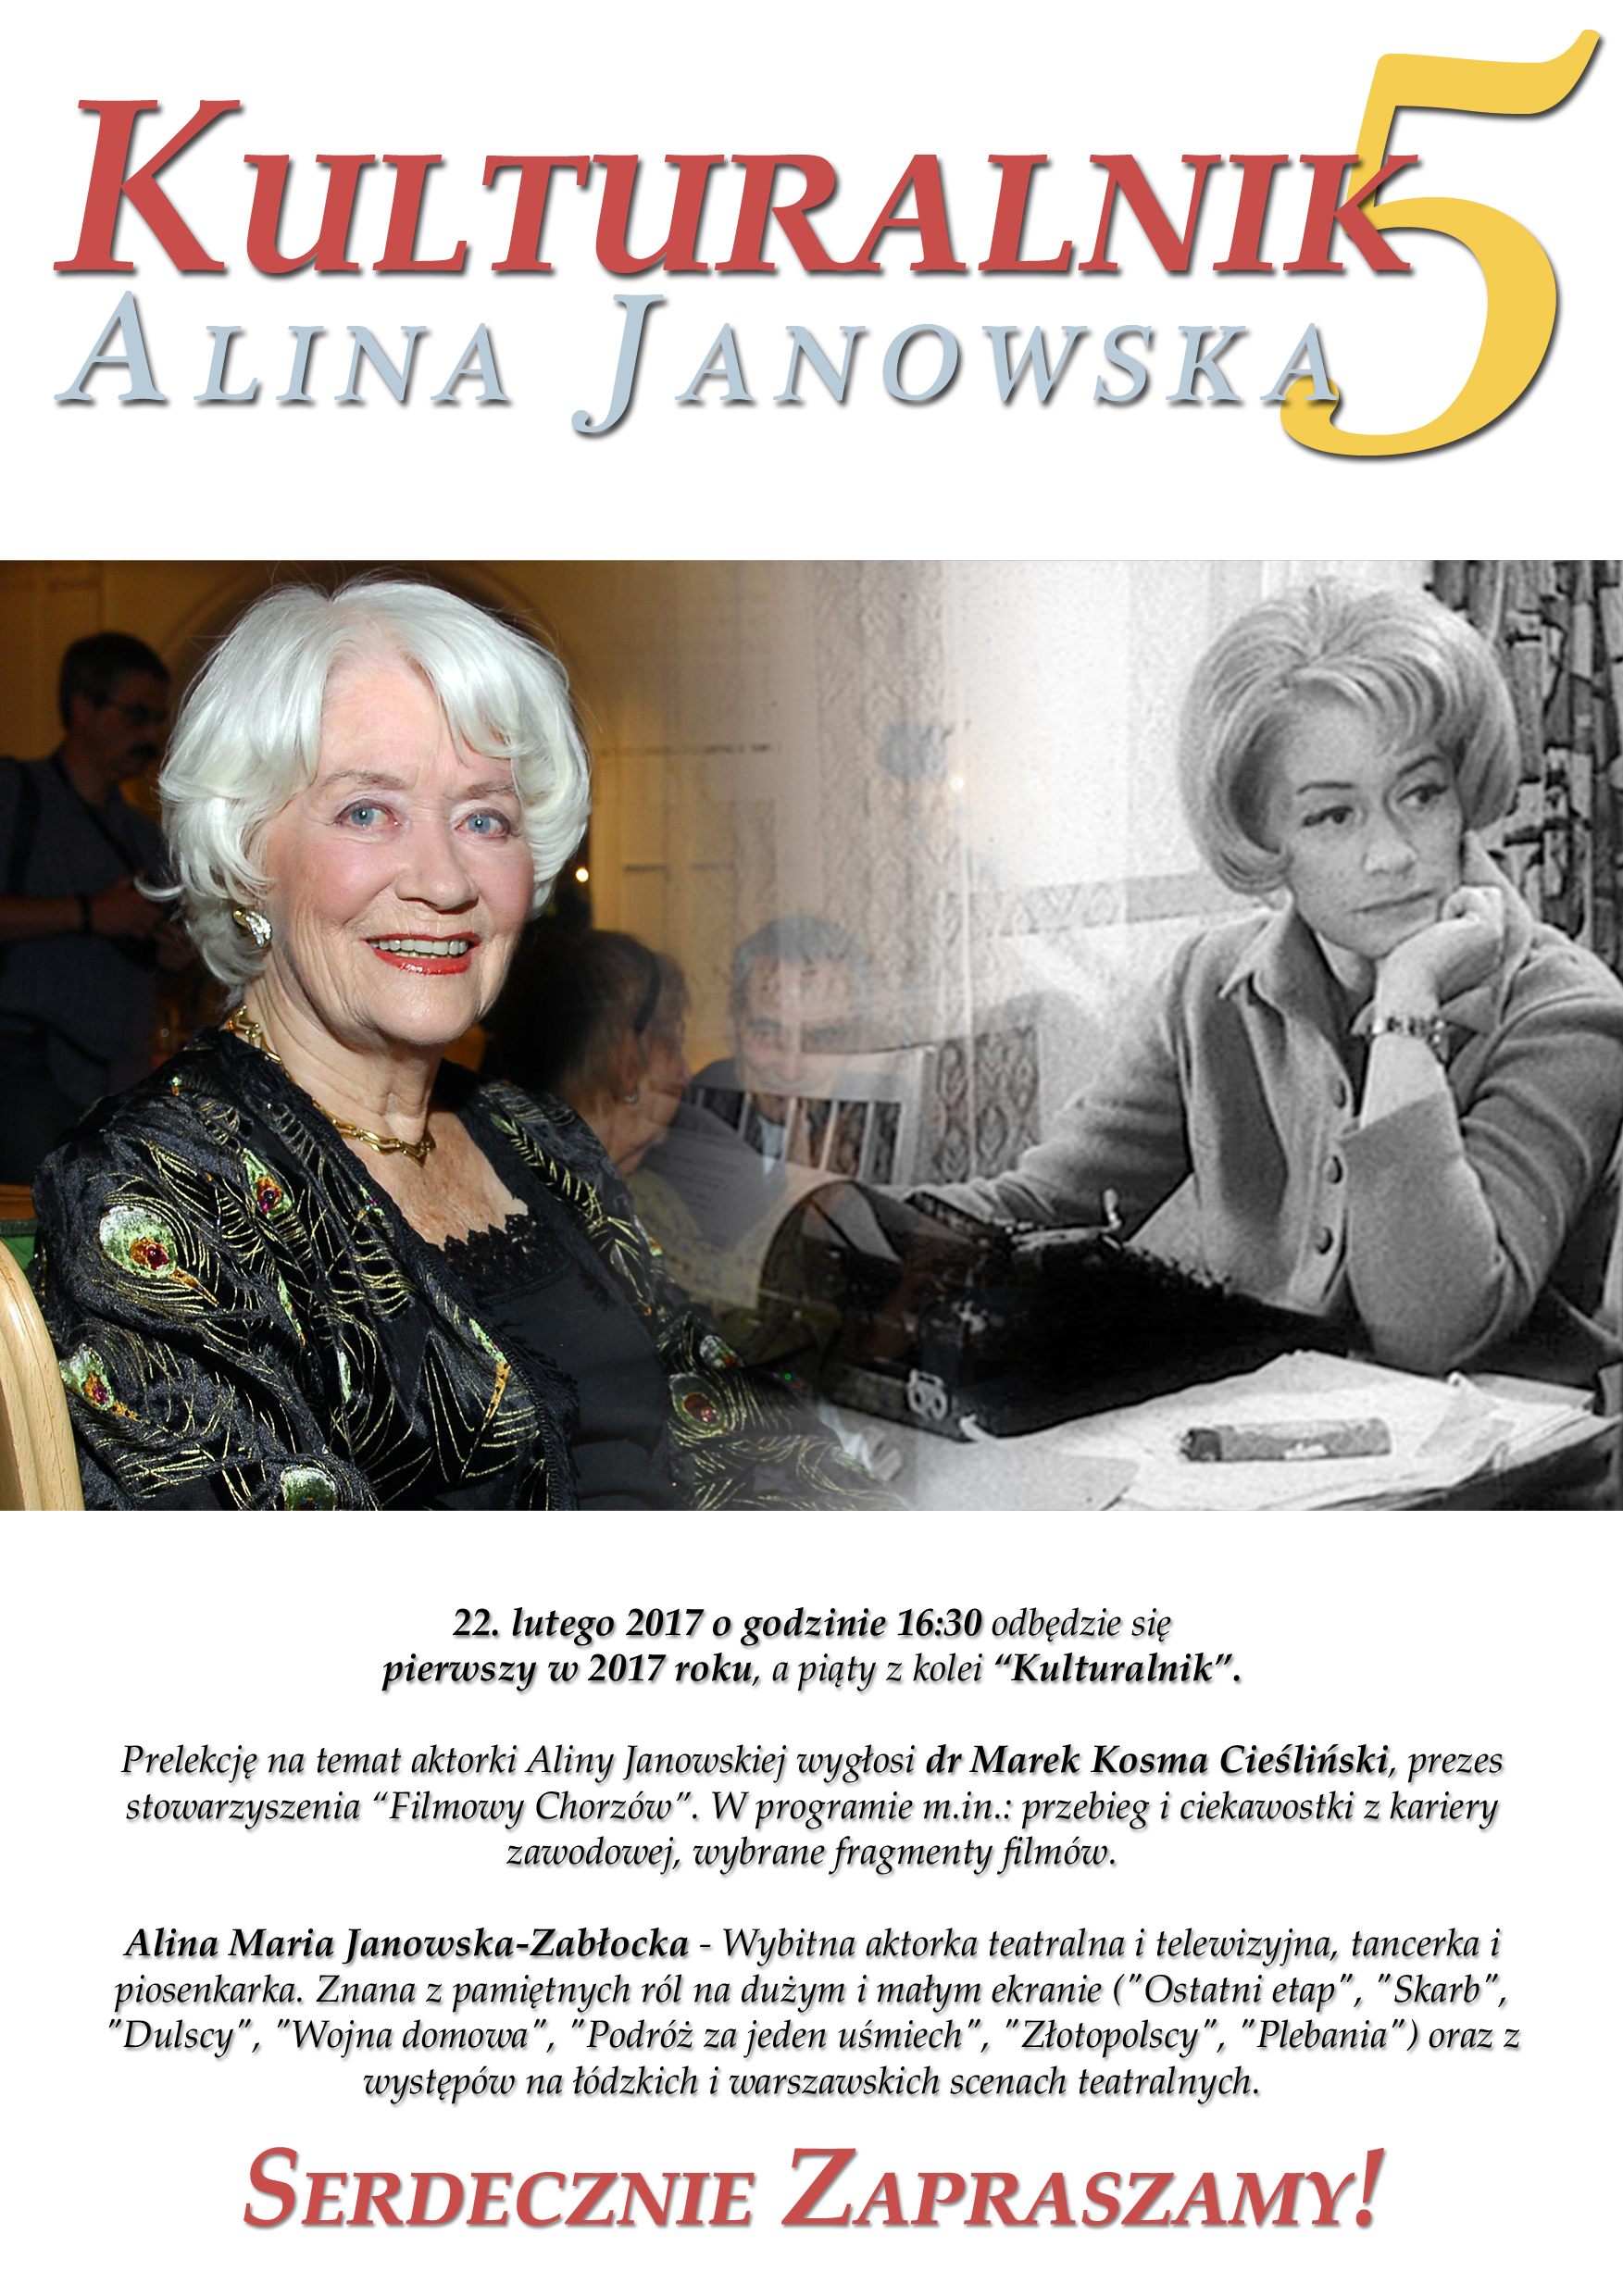 Kulturalnik 5 - Alina Janowska